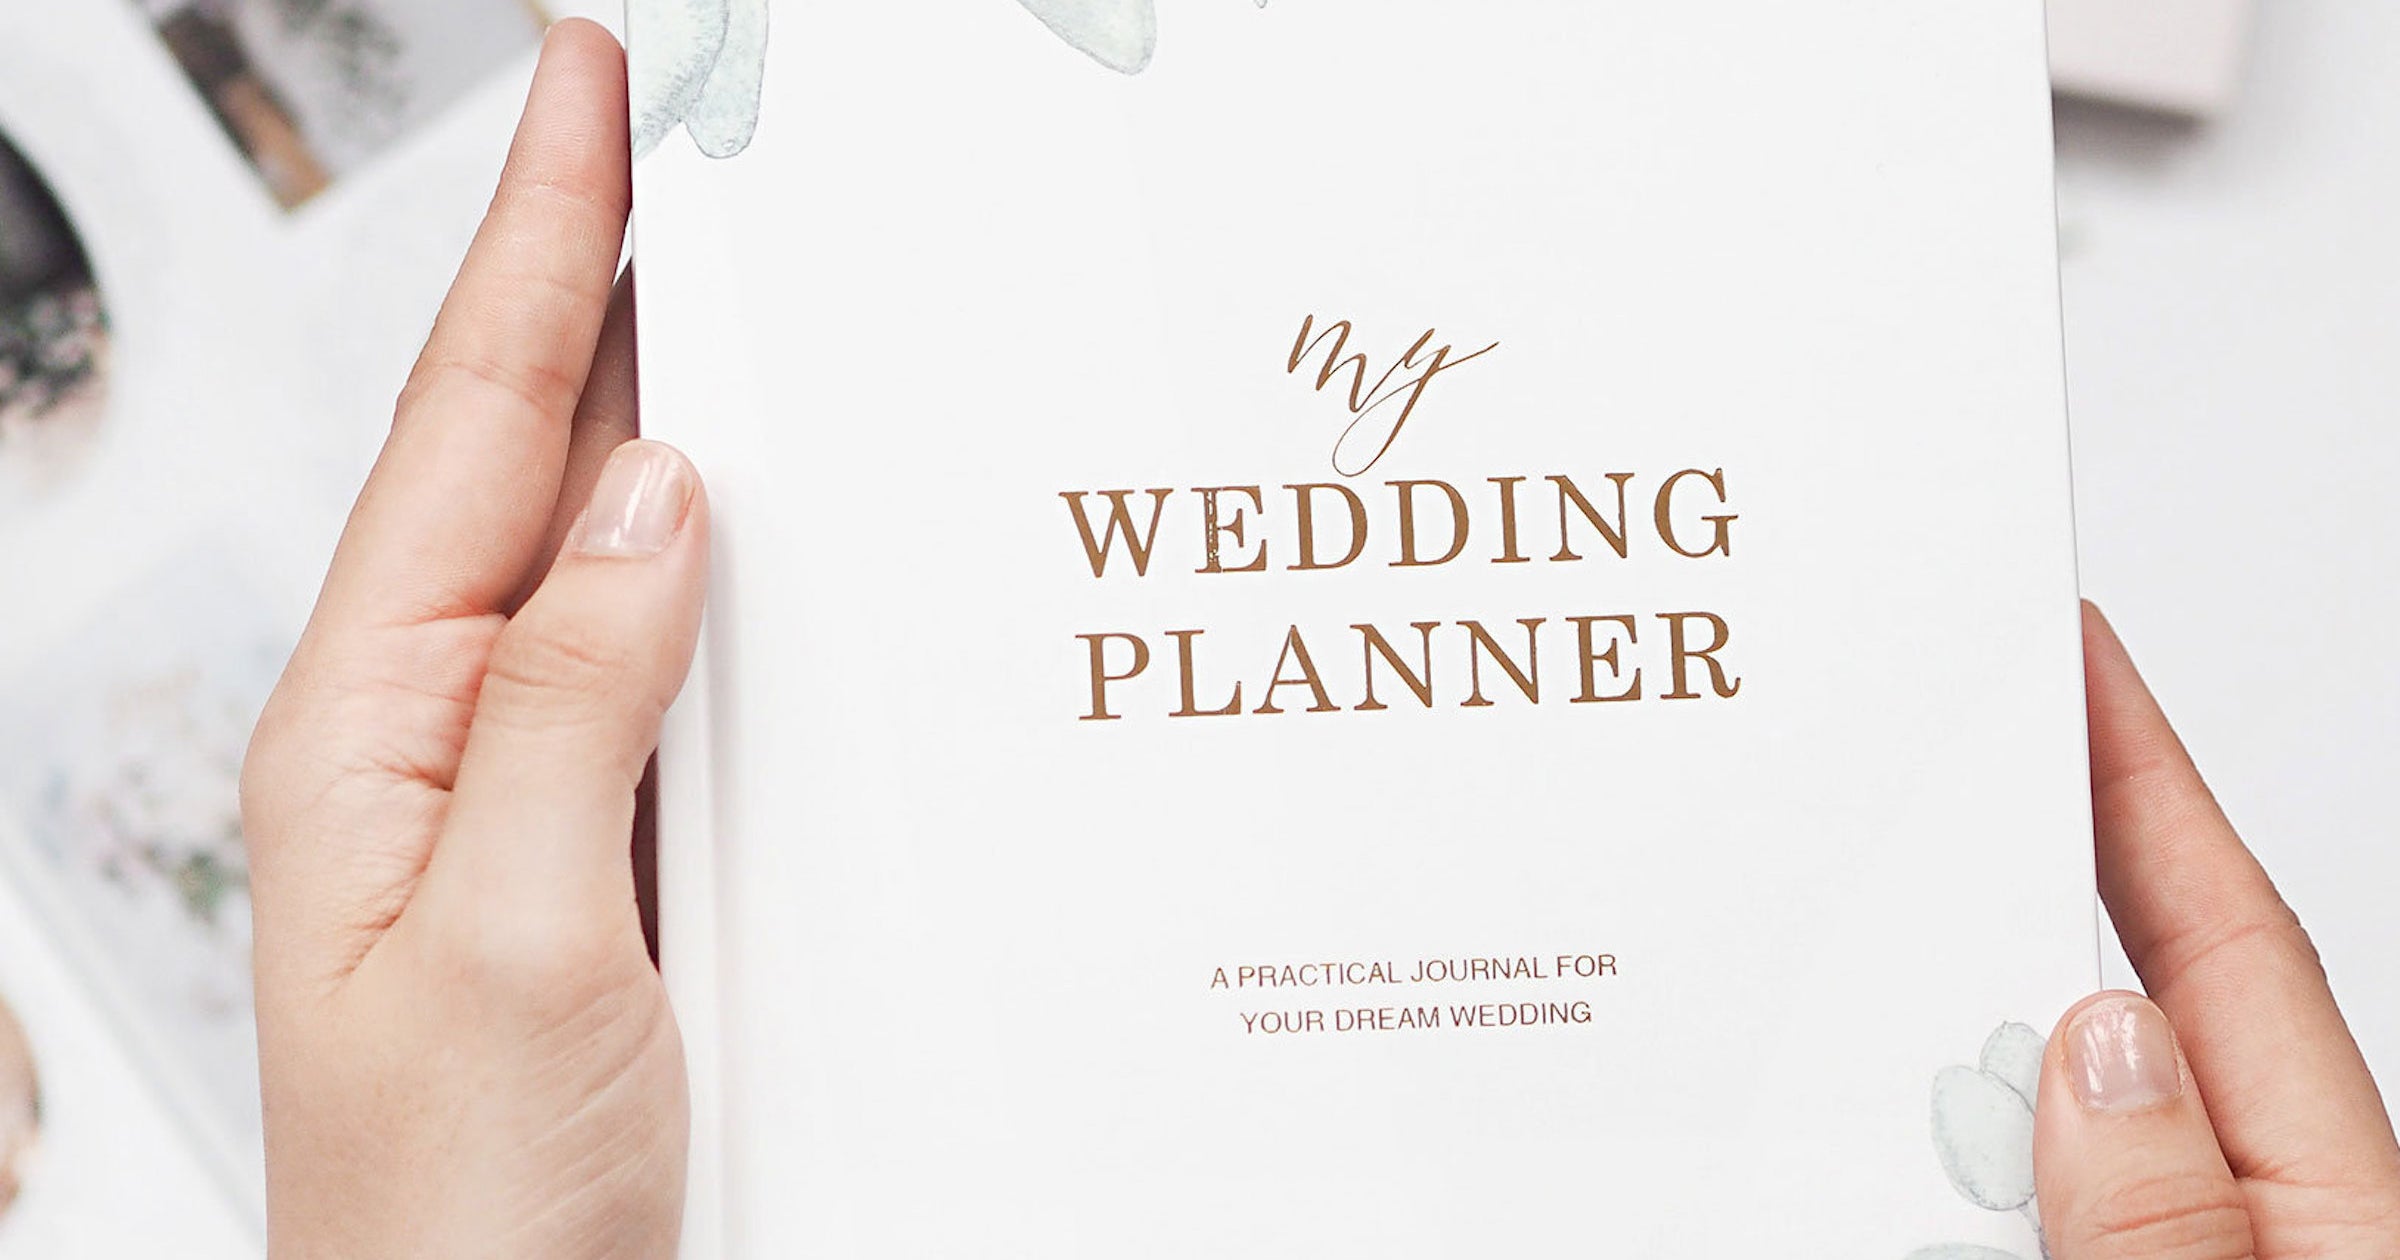 Best Wedding Planner Books For Any